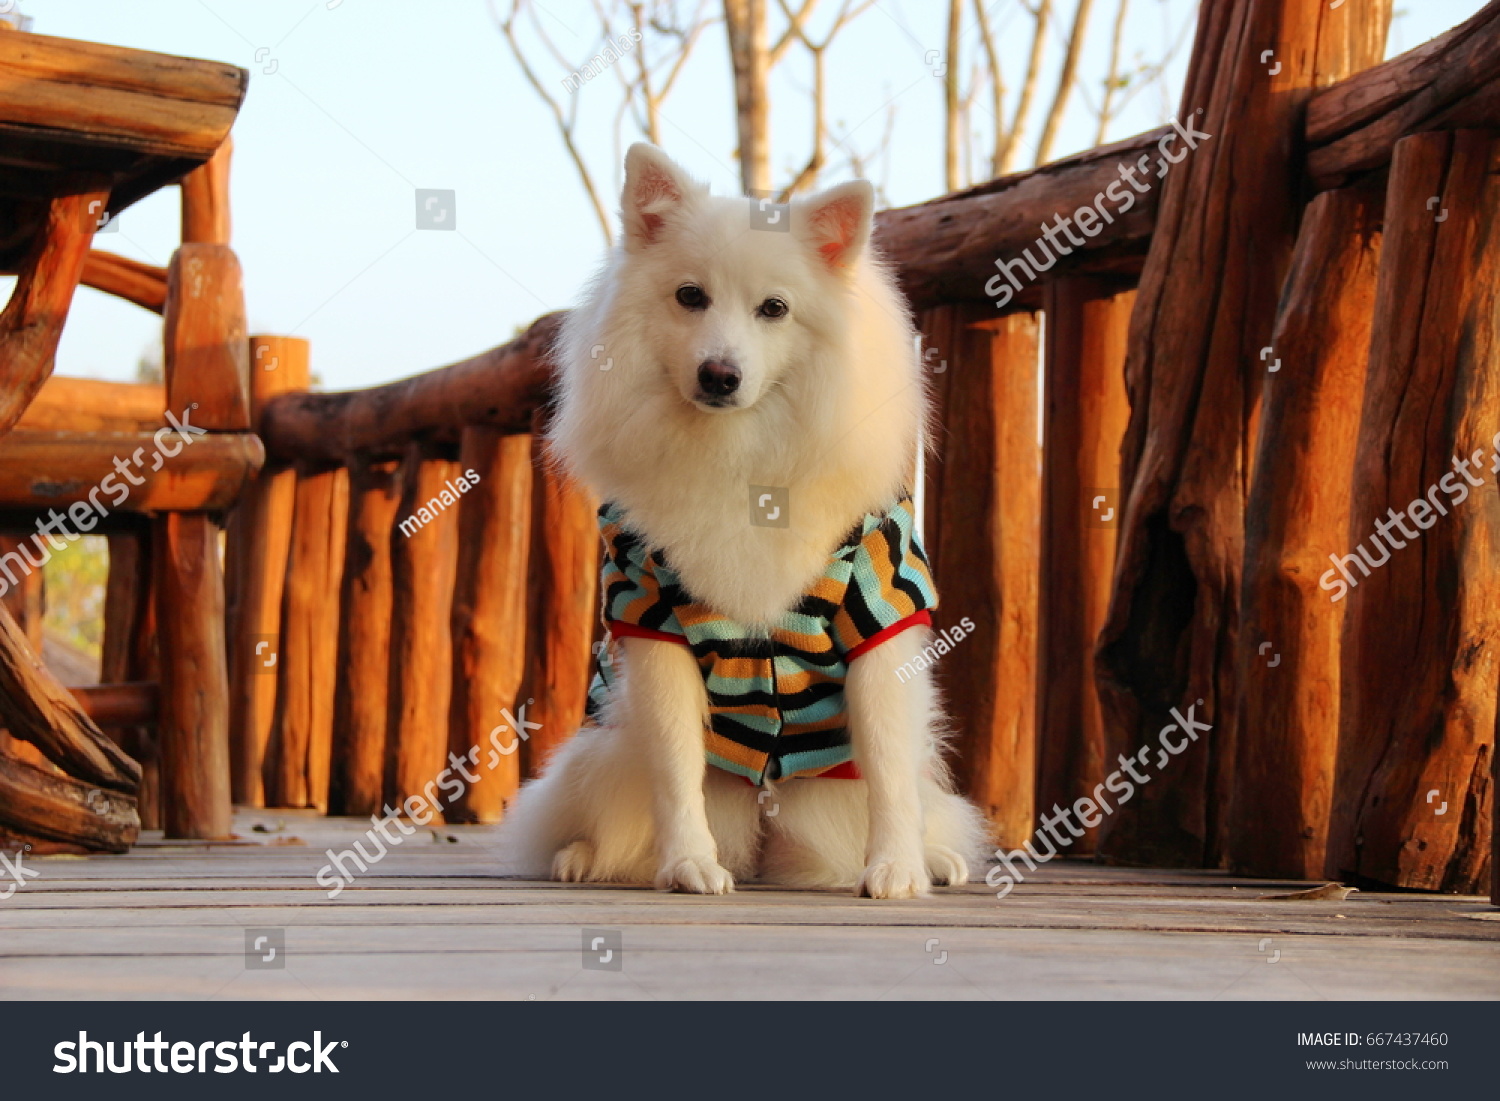 White Dog Japanese Spitz Wear Sweater Stock Photo Edit Now